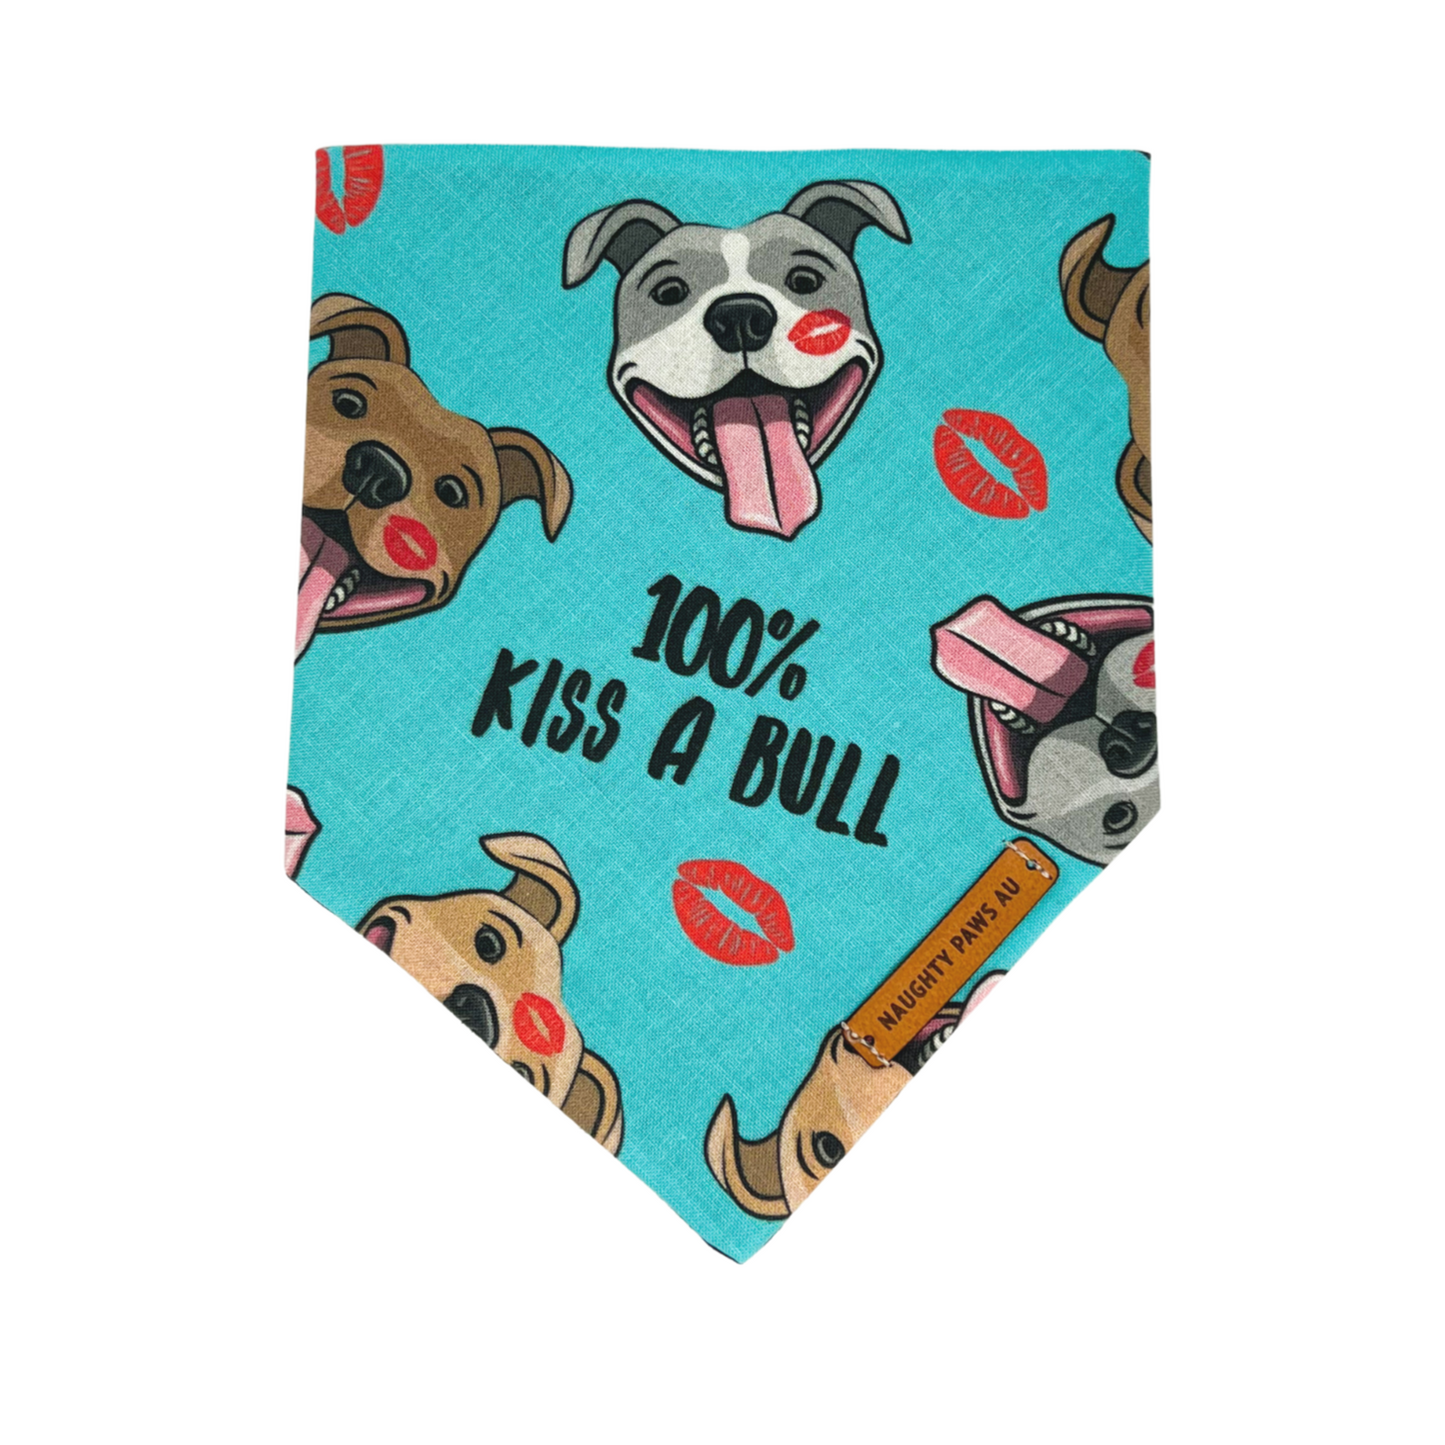 "100% Kiss A Bull" Pet bandana